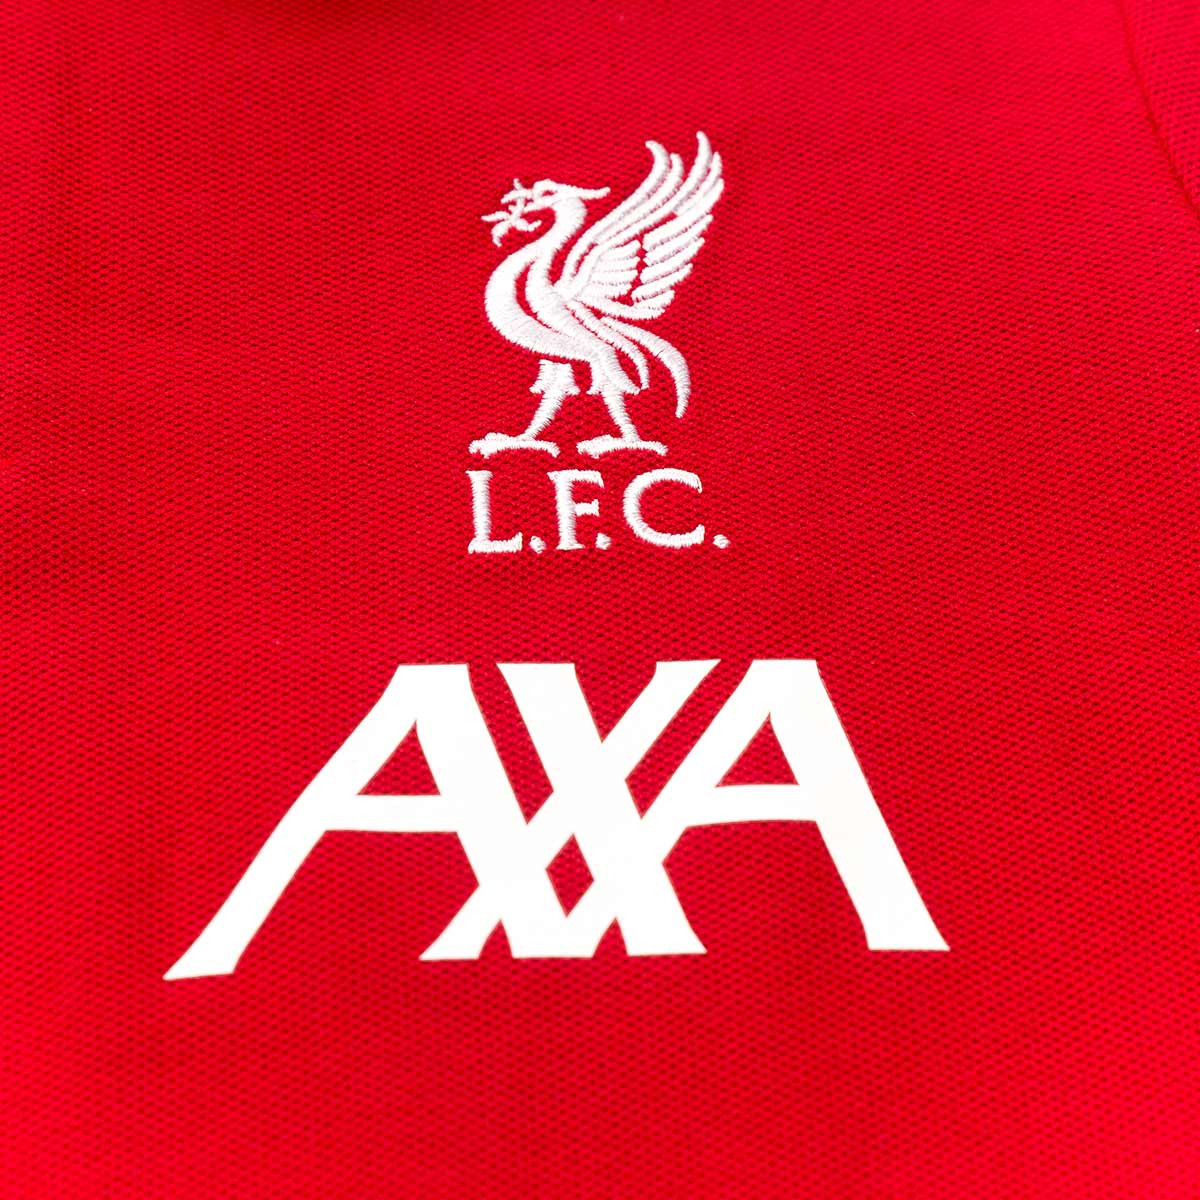 Liverpool Logo 2021 / Liverpool Football Club Official 2021 Slim Diary ...